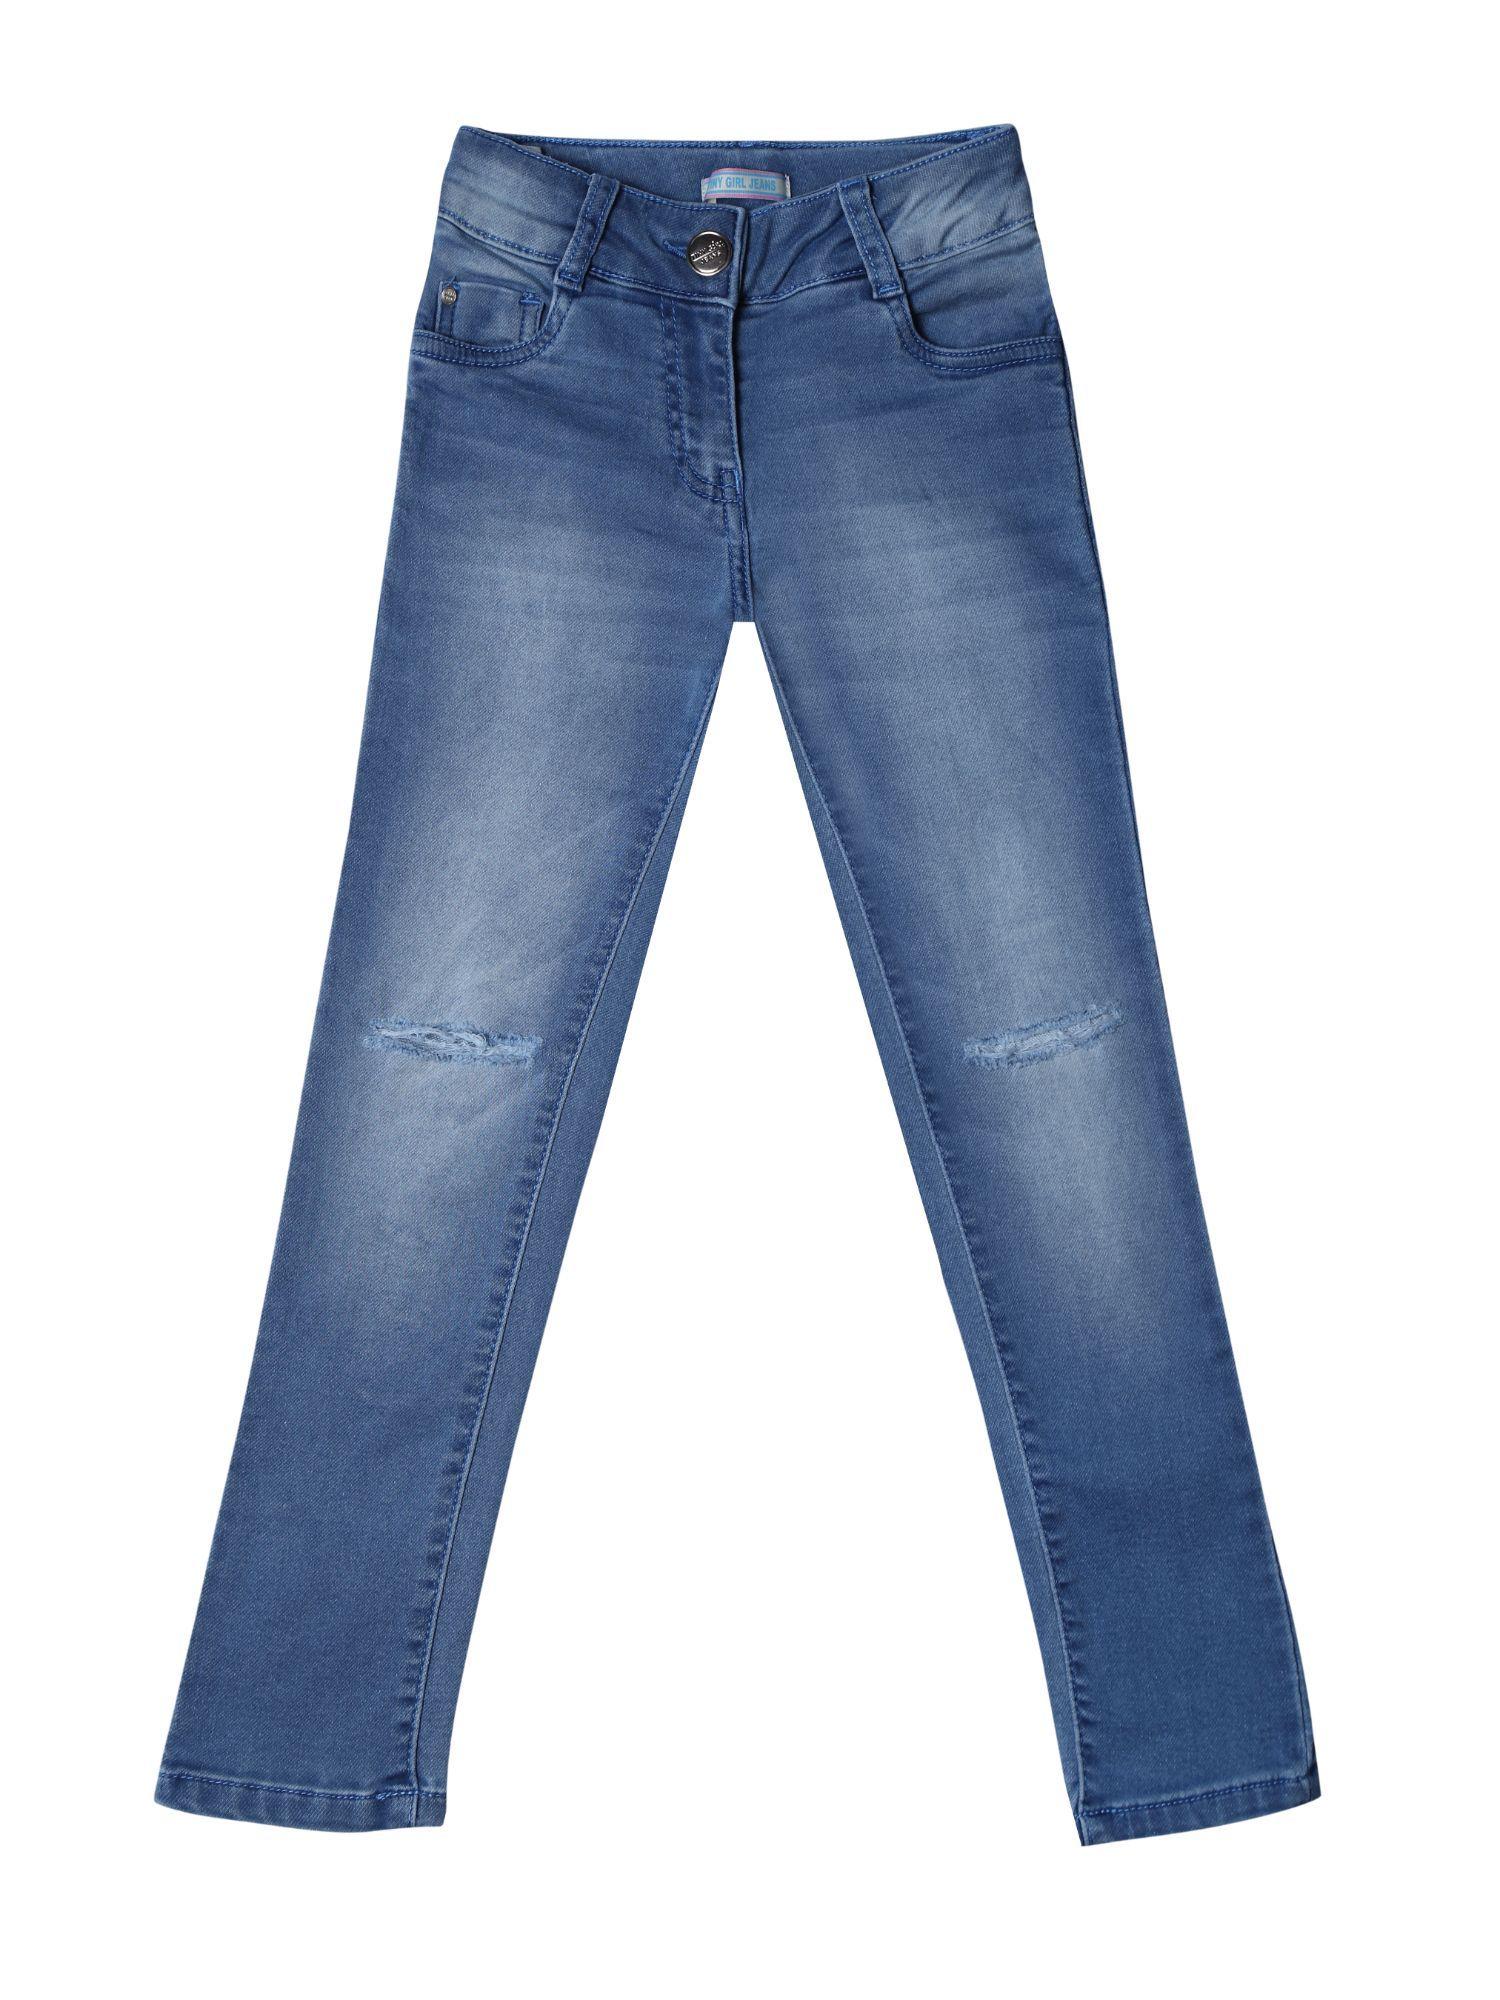 mild distress detail jeans - light blue